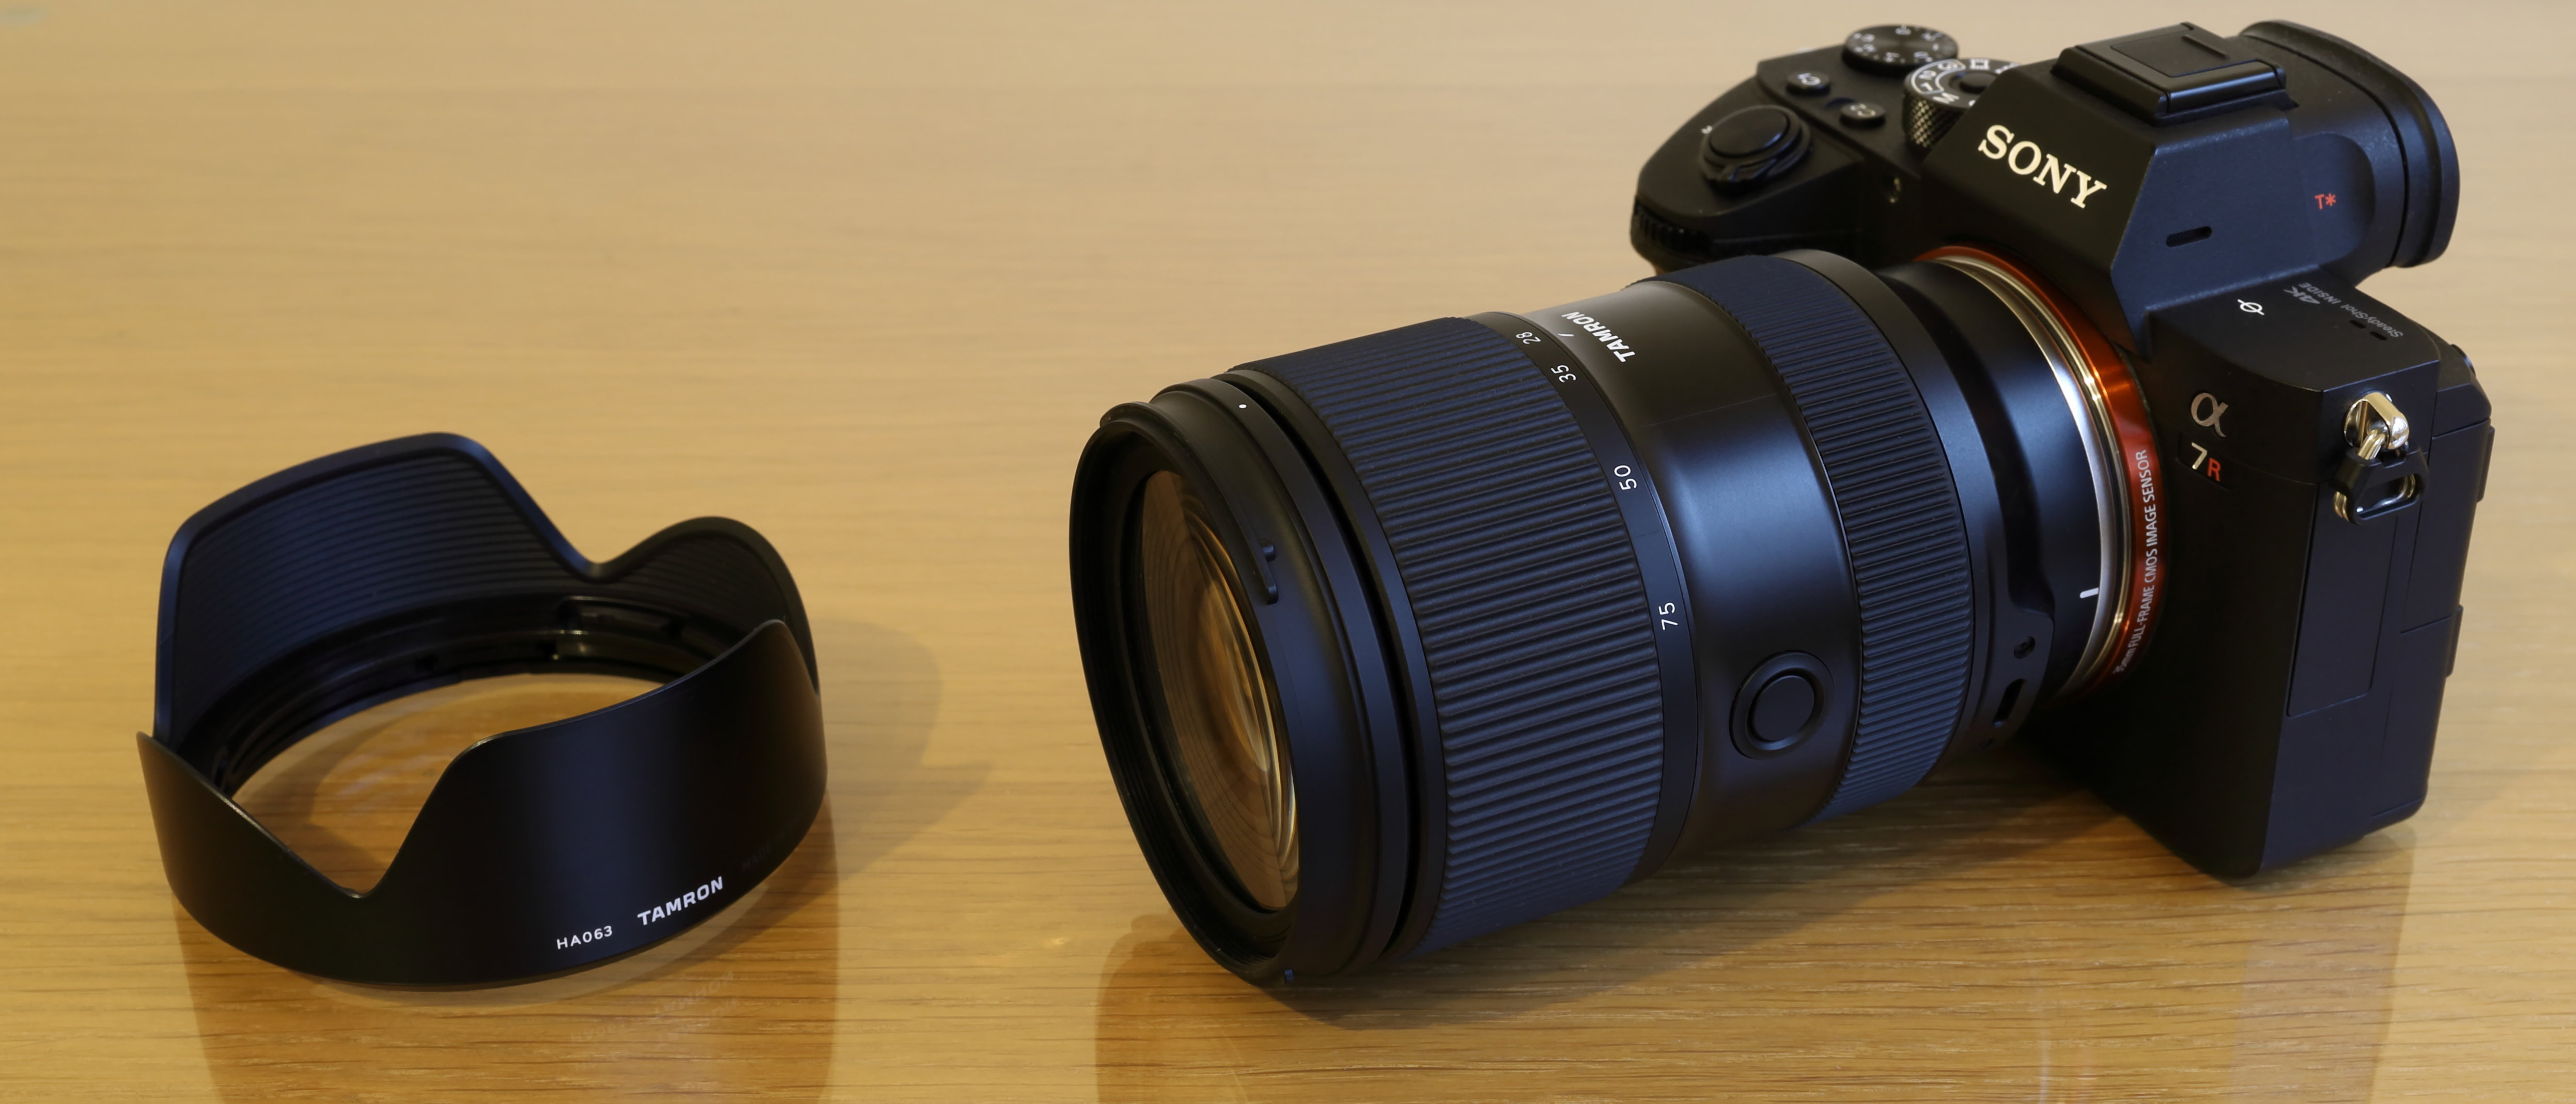 Tamron 28-75mm f/2.8 Di III RXD G2 review | Digital Camera World